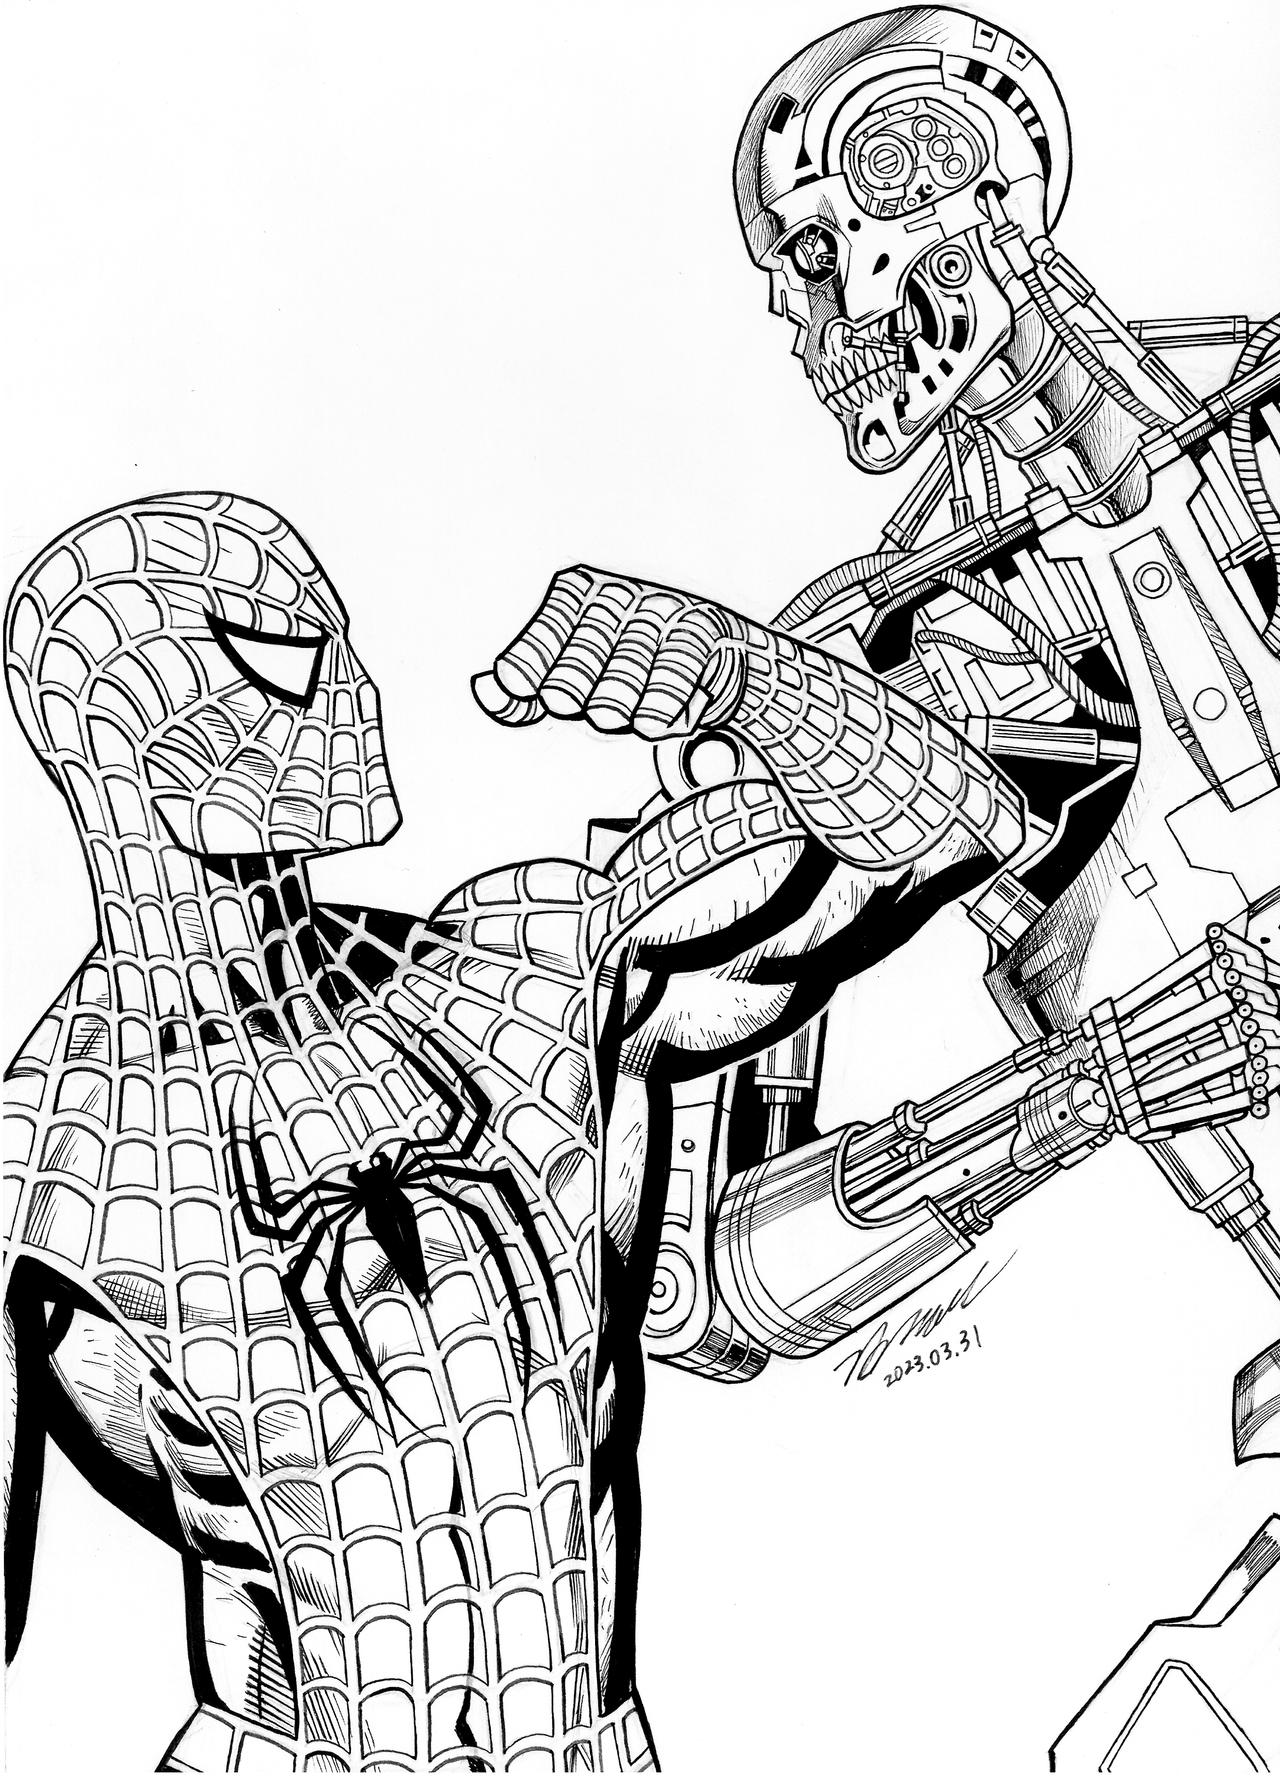 Spider-Man vs Terminator by KyoungInKim on DeviantArt